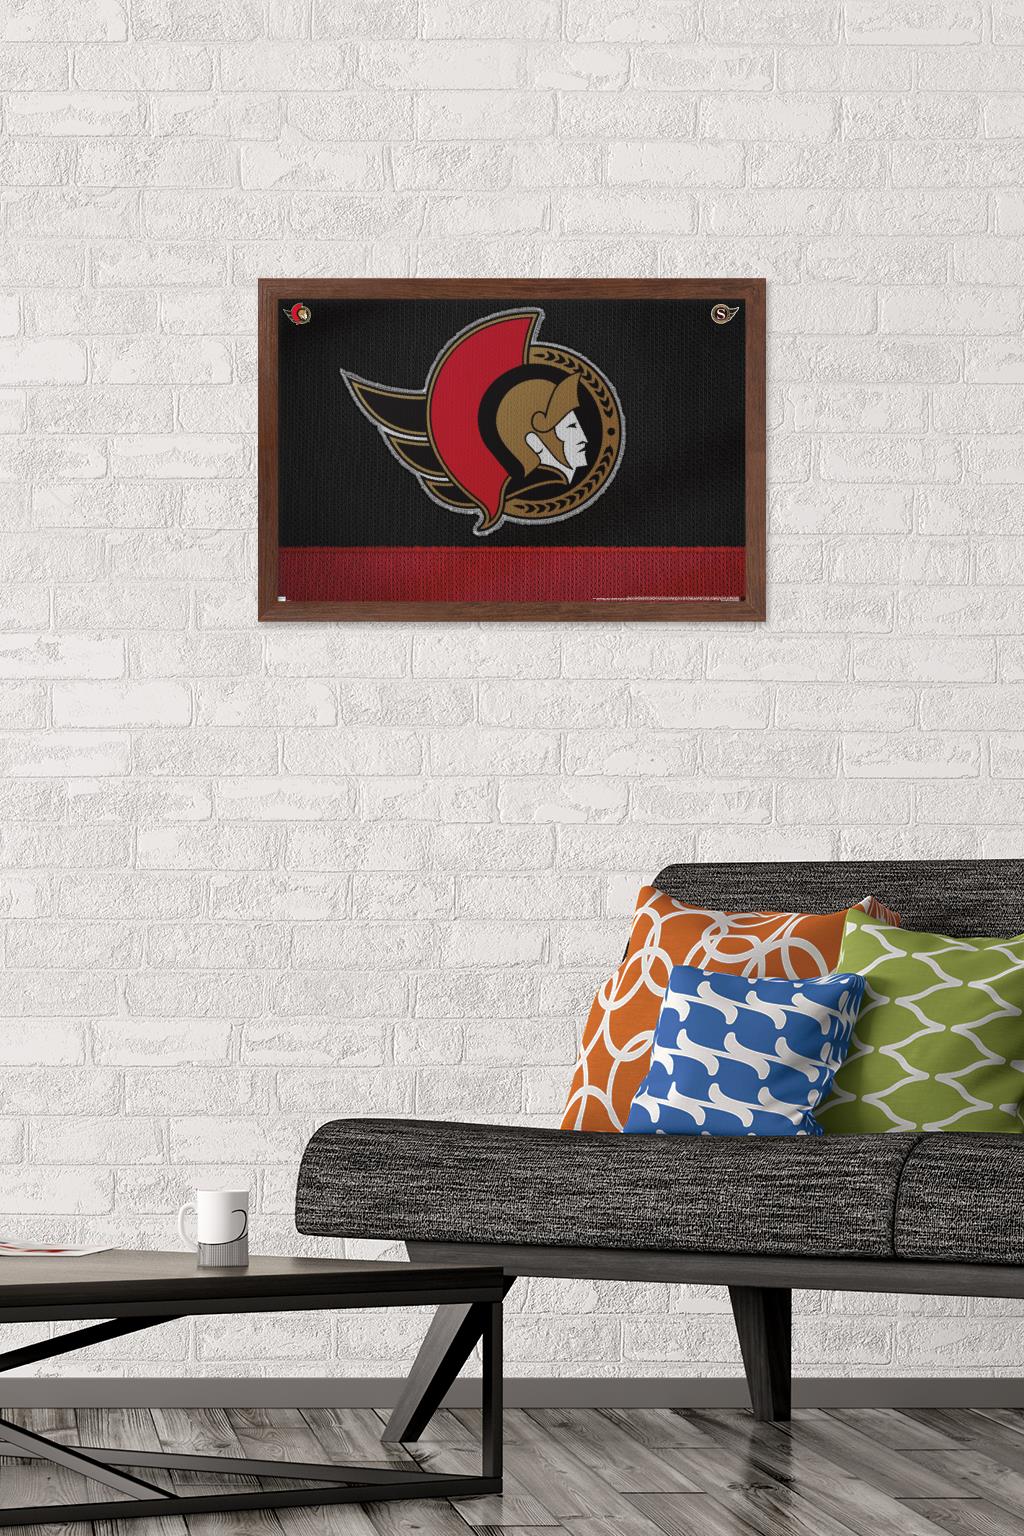 NHL Ottawa Senators - Logo 20 Wall Poster, 14.725" x 22.375", Framed - image 2 of 5